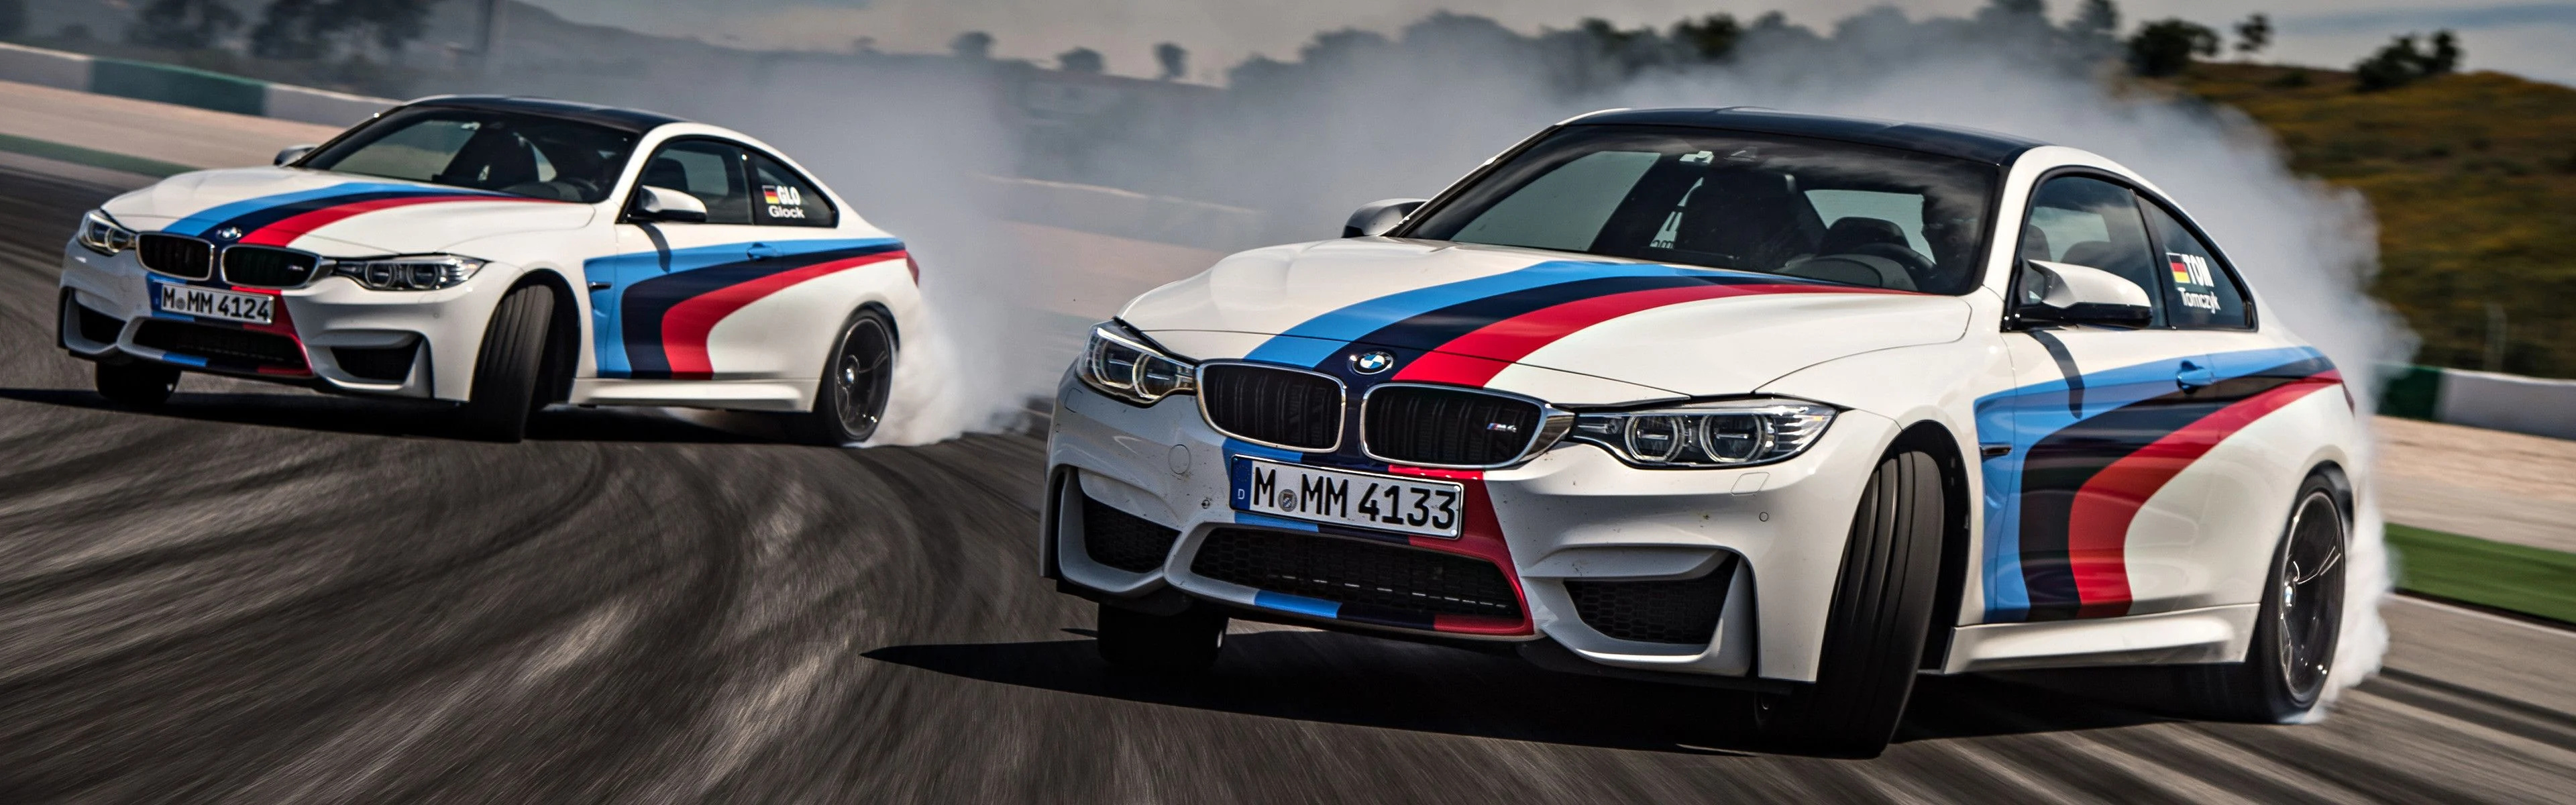 Drifting: BMW M4 F82 high-performance sports cars, Extreme turn, Racing track. 3840x1200 Dual Screen Background.